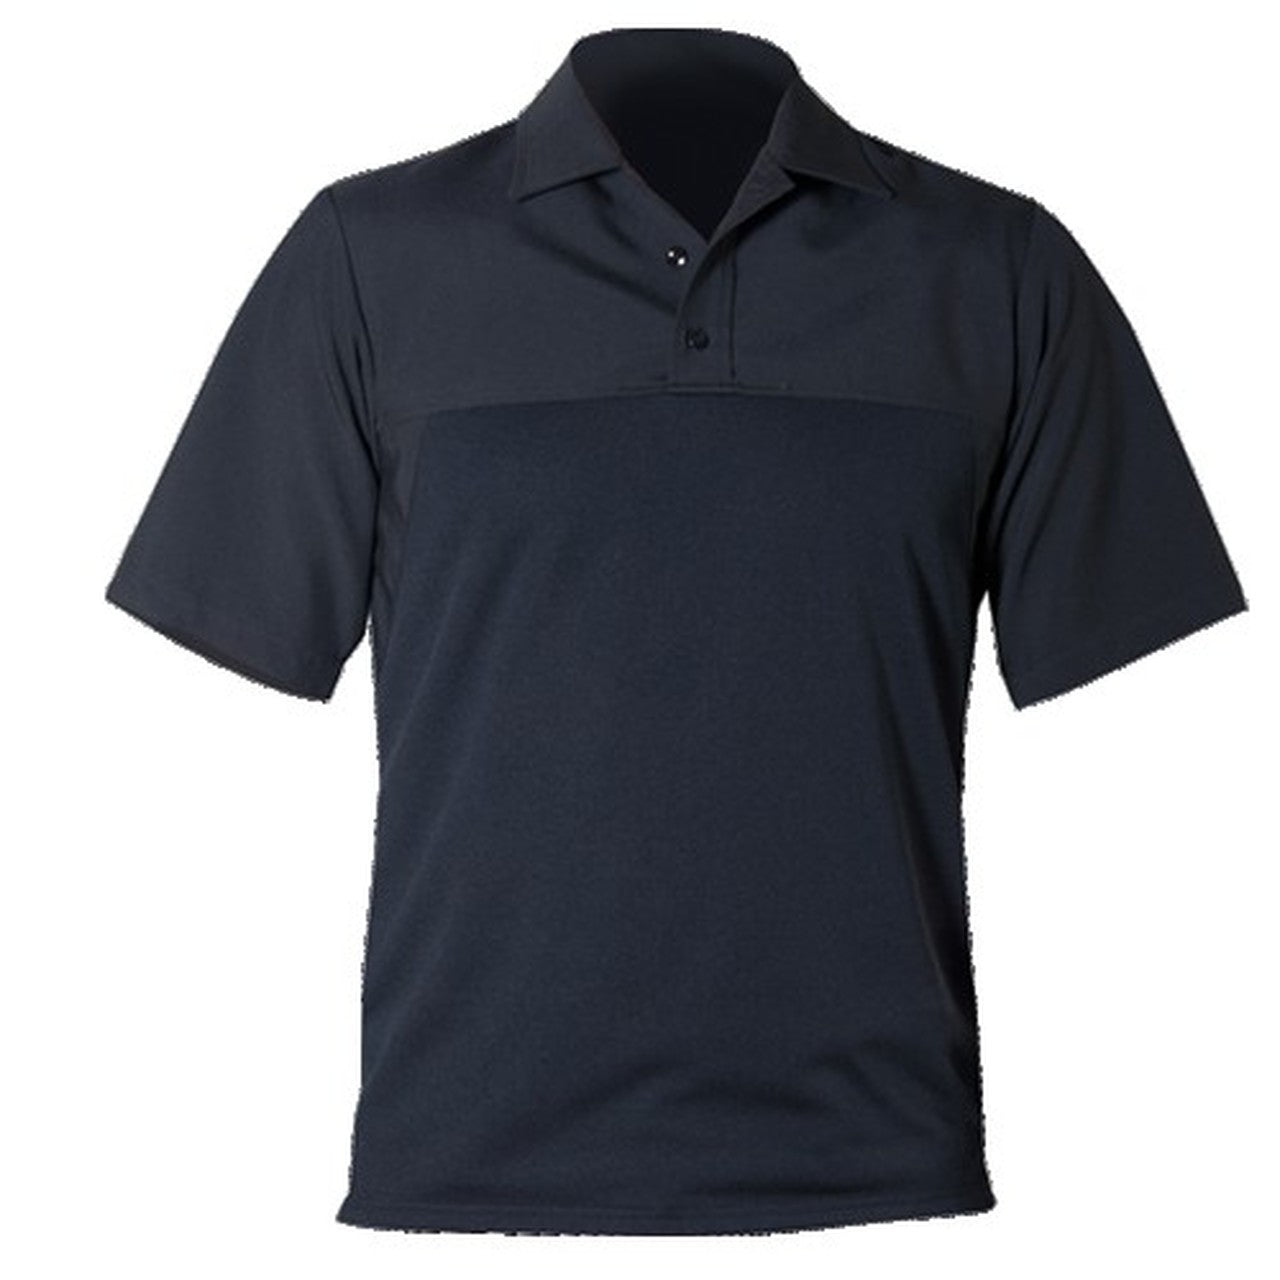 Police Public Safety | Long Sleeve Armorskin Wool Polo Shirt | Navy Blue Wool Blend Firemen Police Uniform Base Shirt